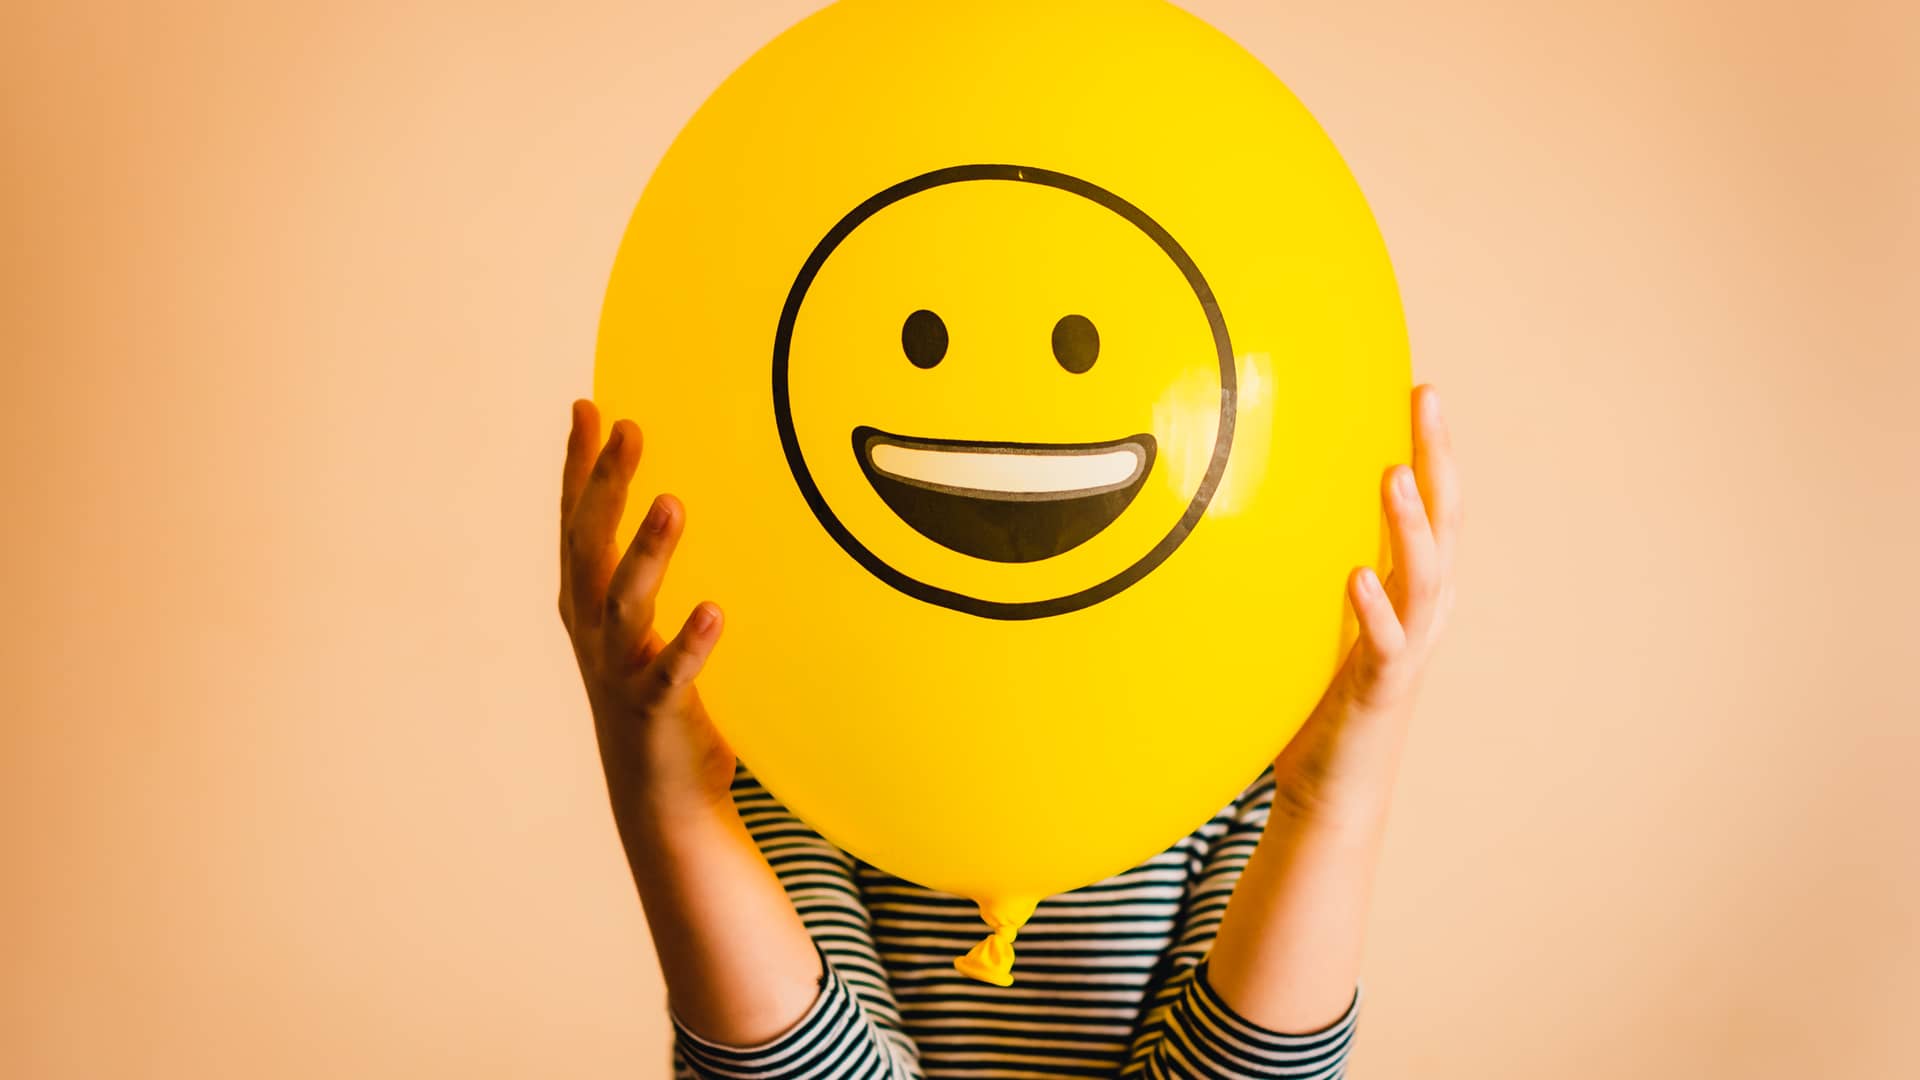 Persona con globo con cara sonriente representa la opinión sobre aseguradora chapka